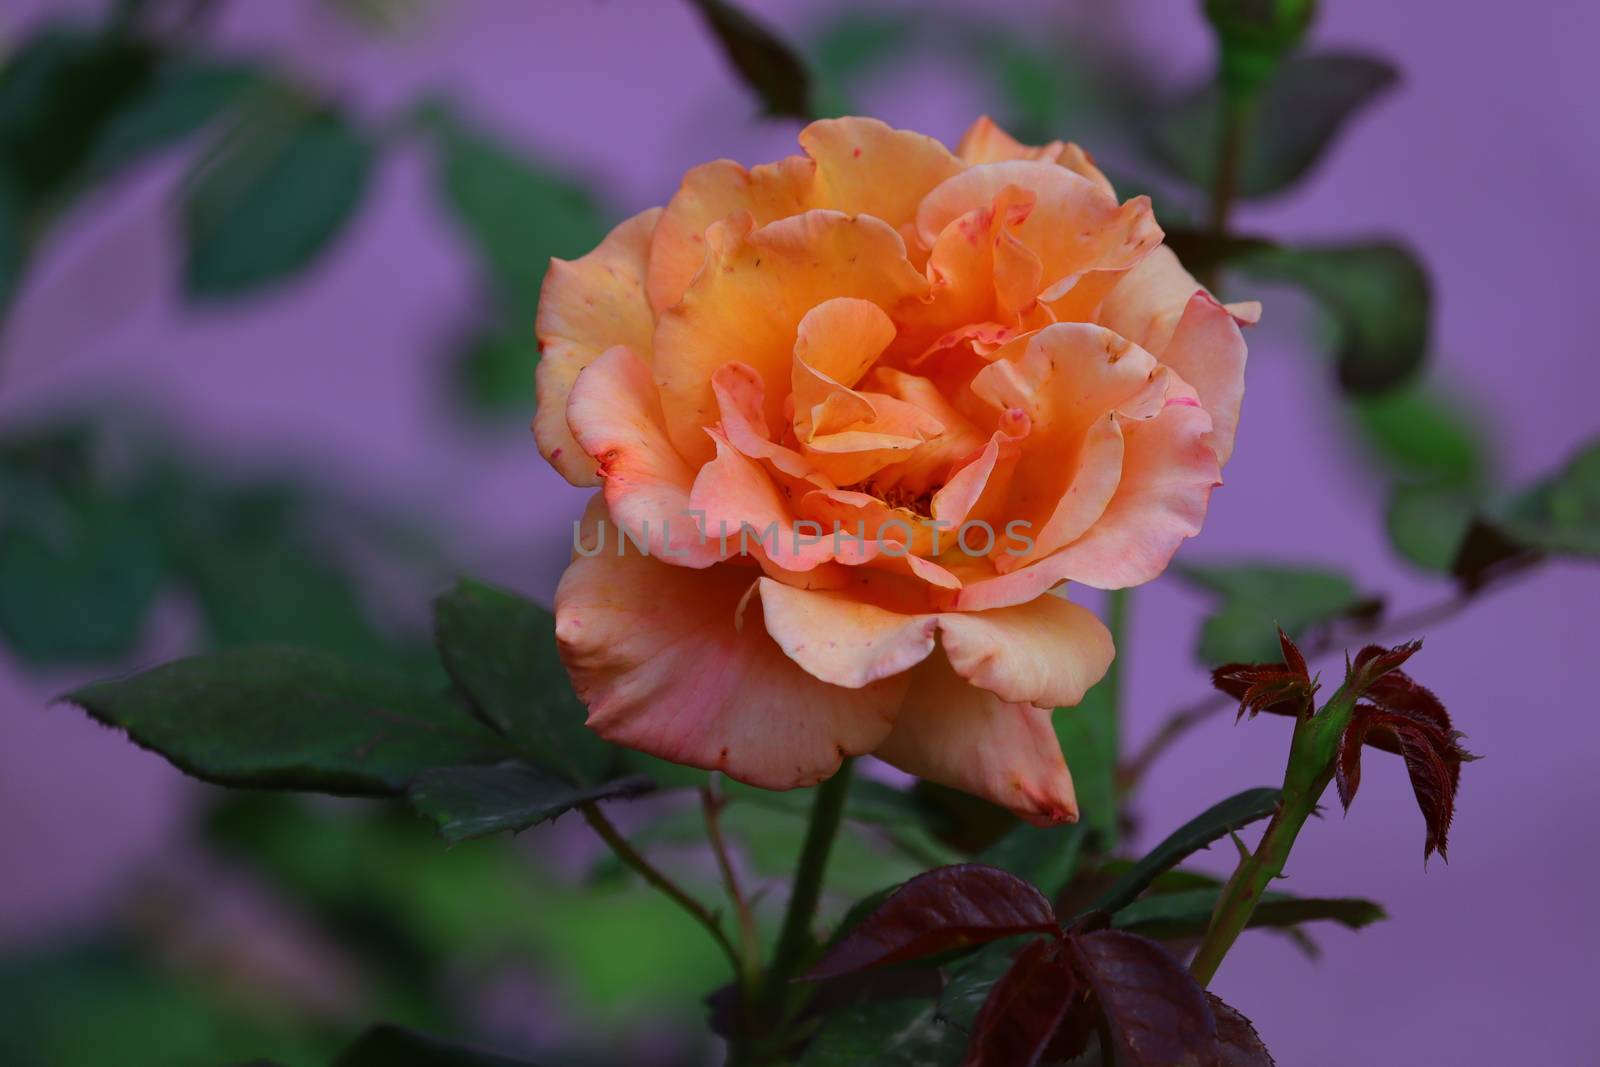 dark yellow rose flower image, hd by 9500102400